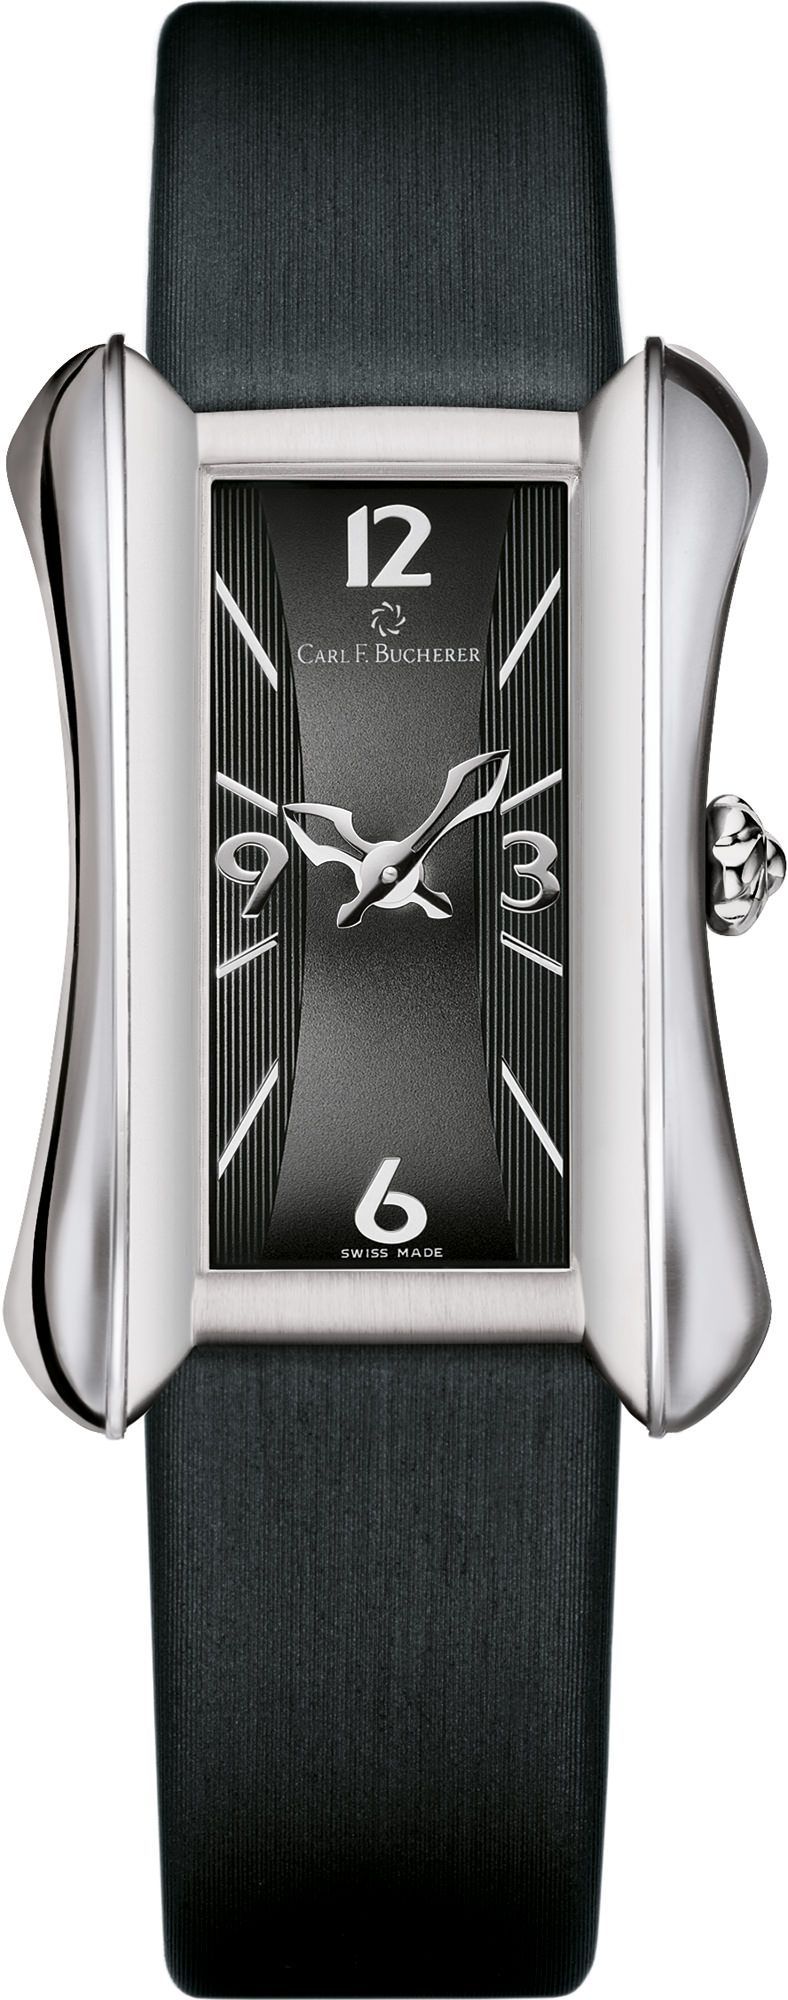 Carl F. Bucherer Alacria Queen Black Dial 30 mm Quartz Watch For Women - 1